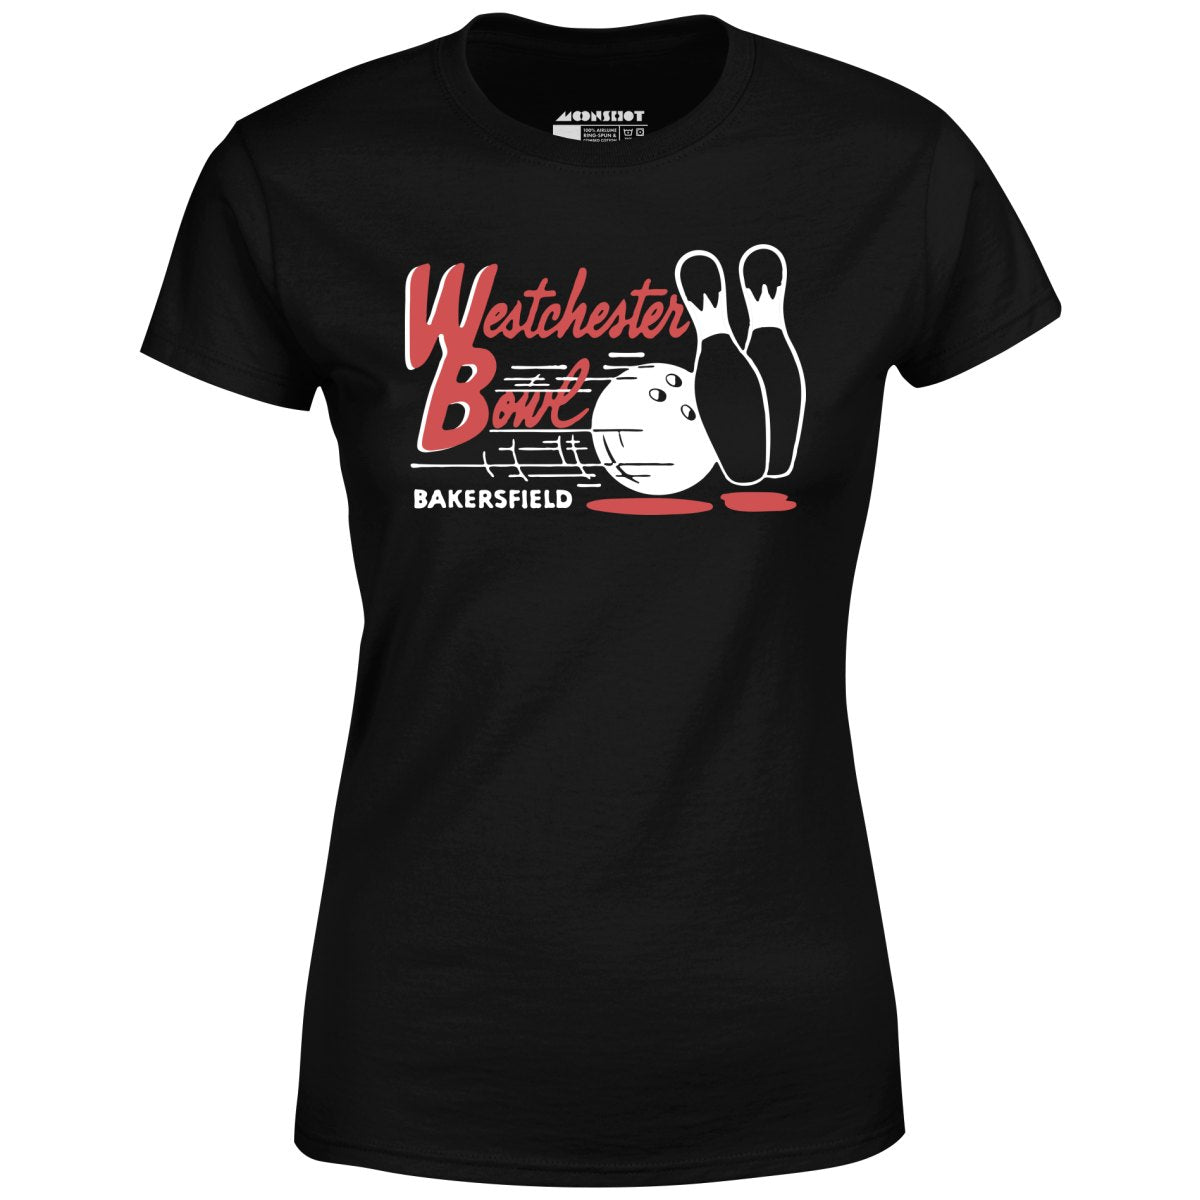 Westchester Bowl - Bakersfield, CA - Vintage Bowling Alley - Women's T-Shirt